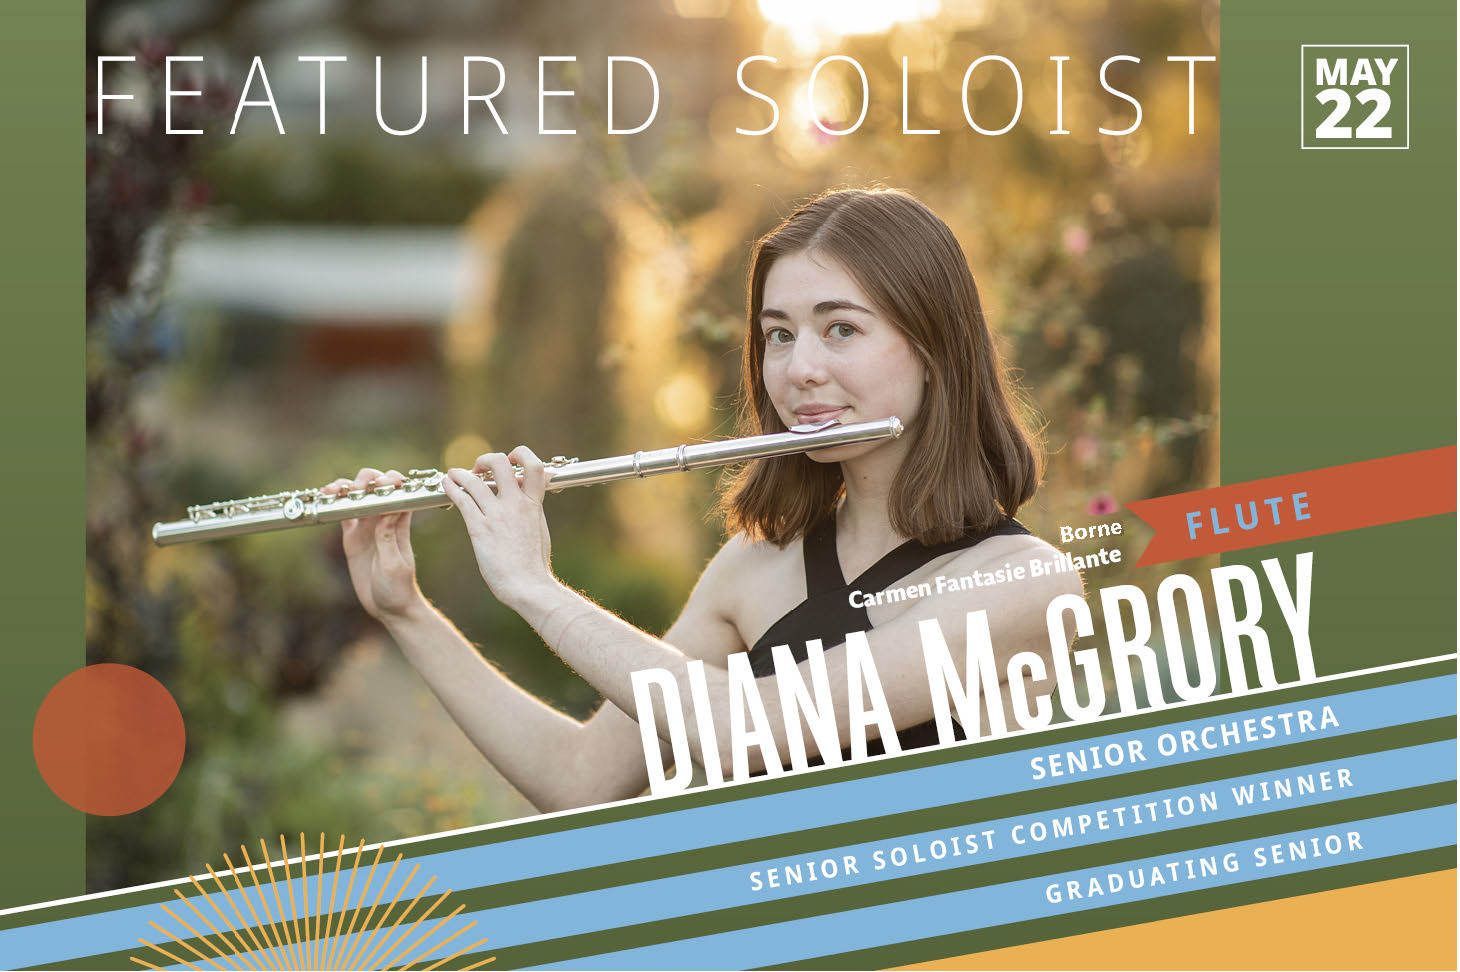 Soloist-DianaMcGrory